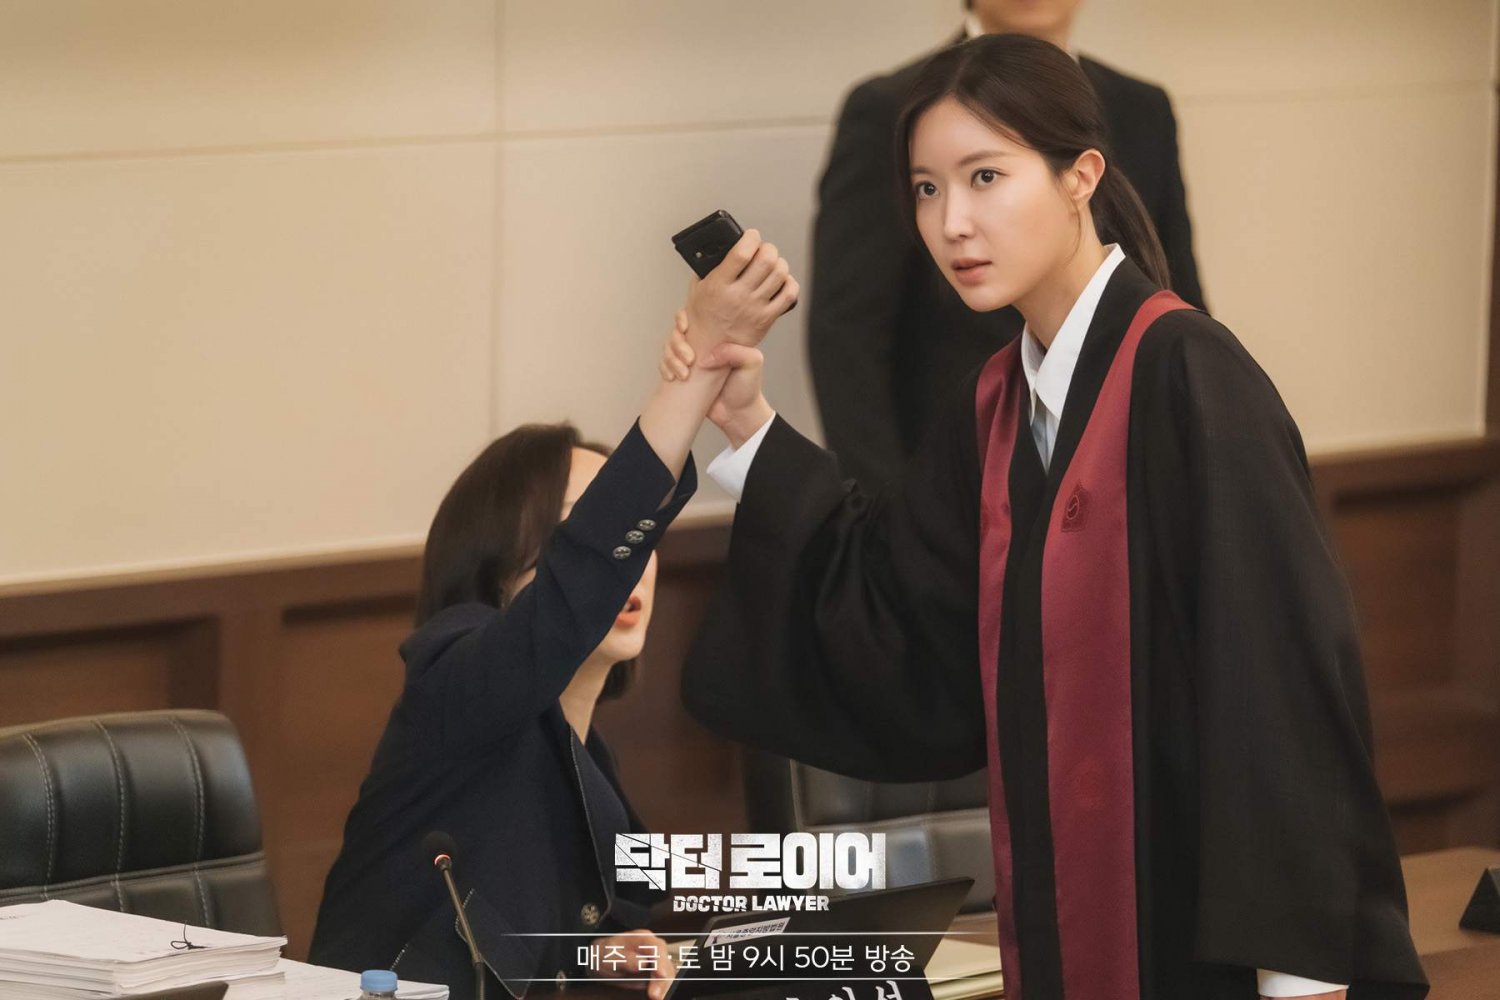 [Photos] New Stills Added for the Korean Drama 'Doctor Lawyer' @ HanCinema